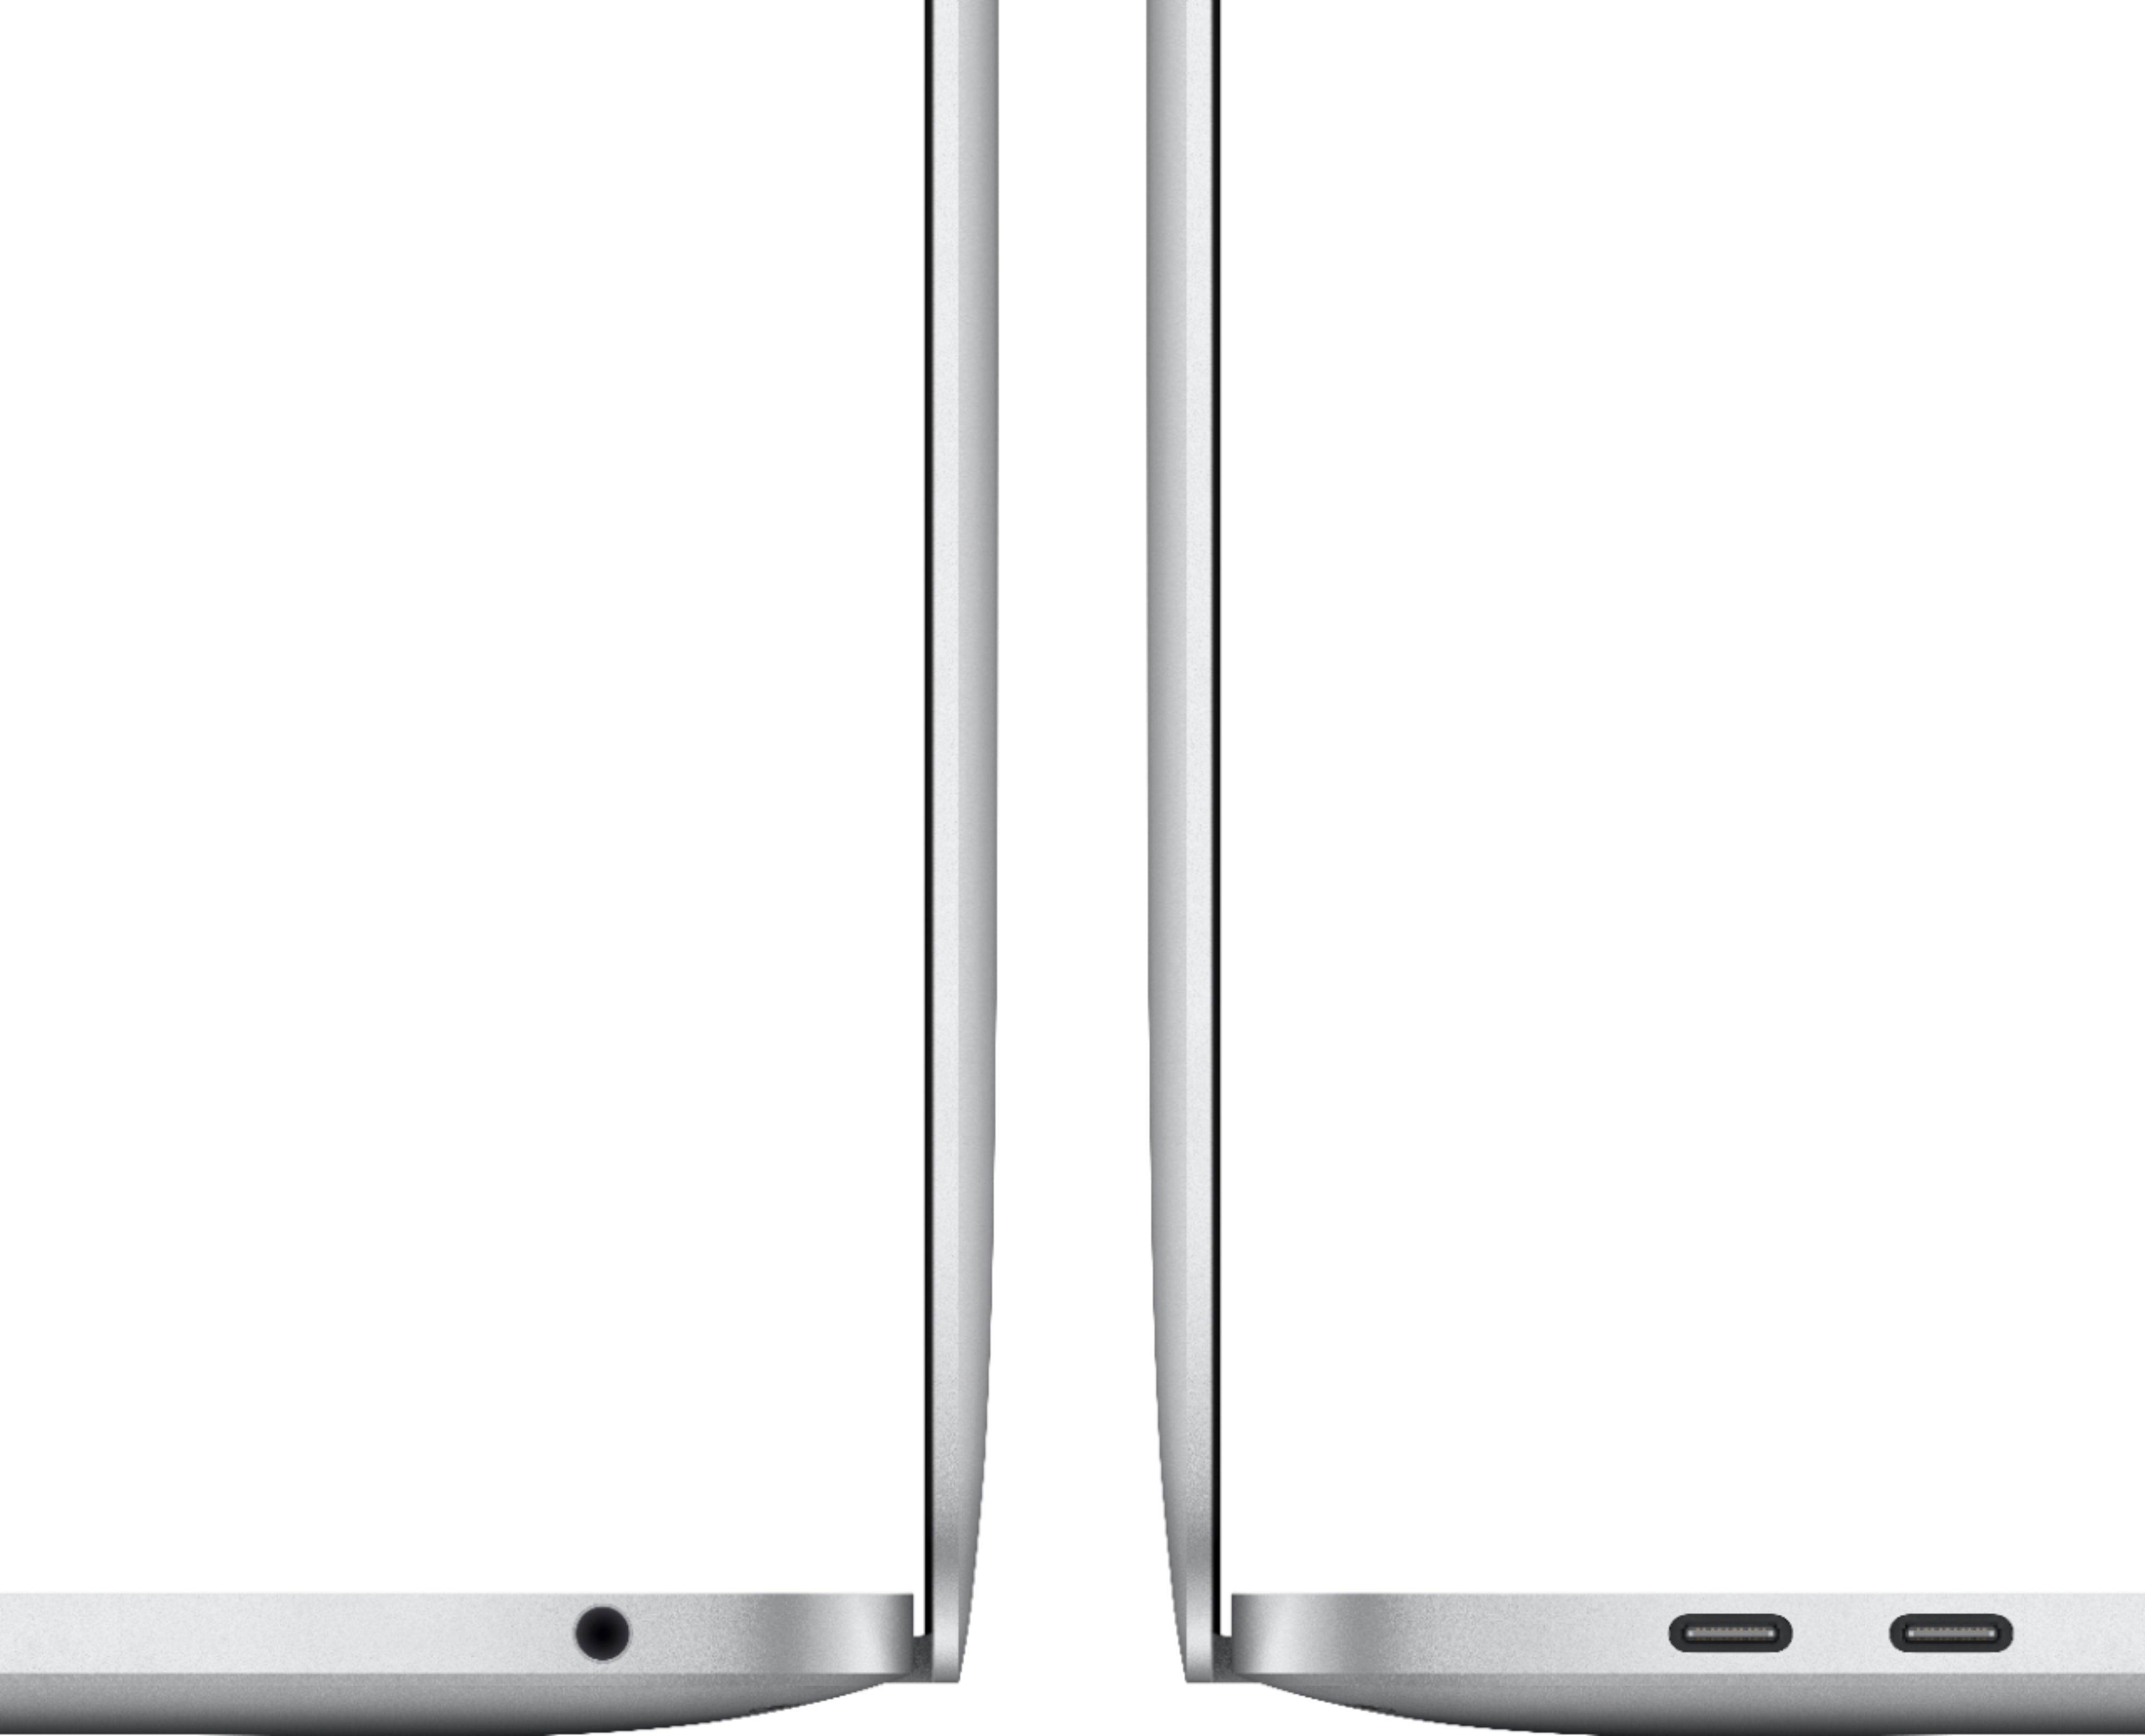 MacBook Pro 13.3in Laptop - Apple M1 chip - 8GB Memory - 256GB SSD (Latest Model) - Silver